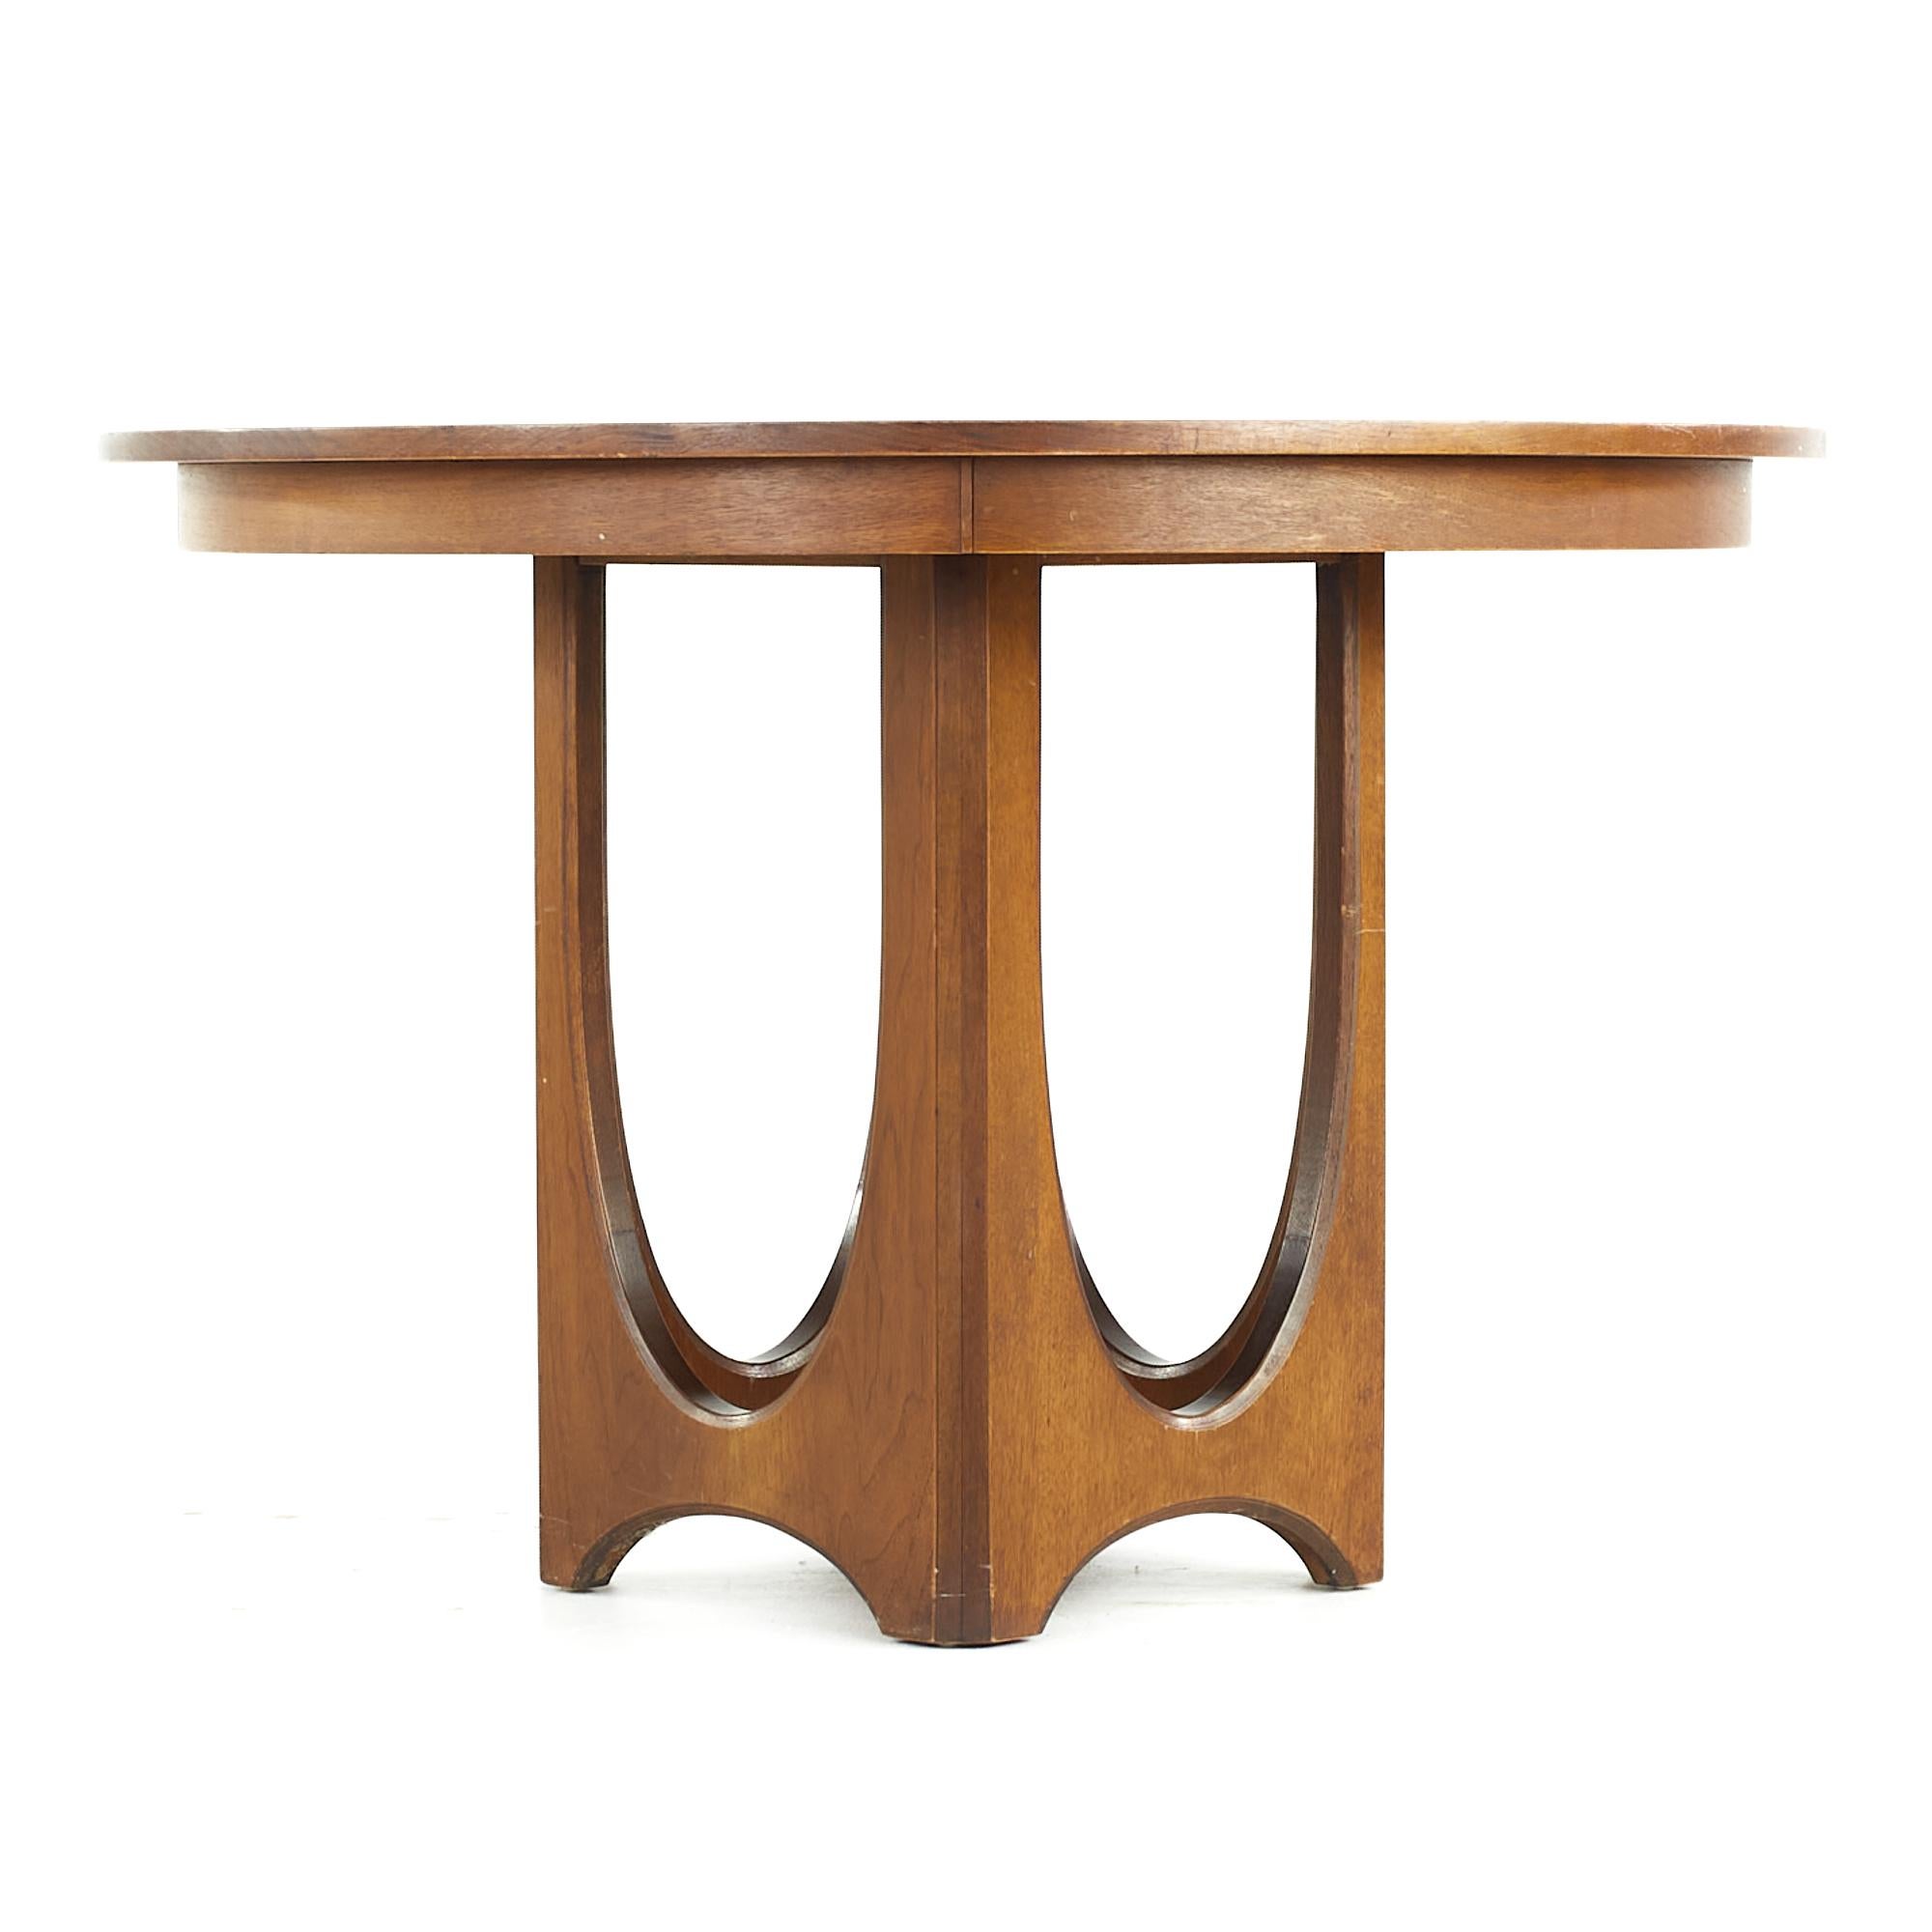 American Broyhill Brasilia Midcentury Walnut Pedestal Table with 3 Leaves